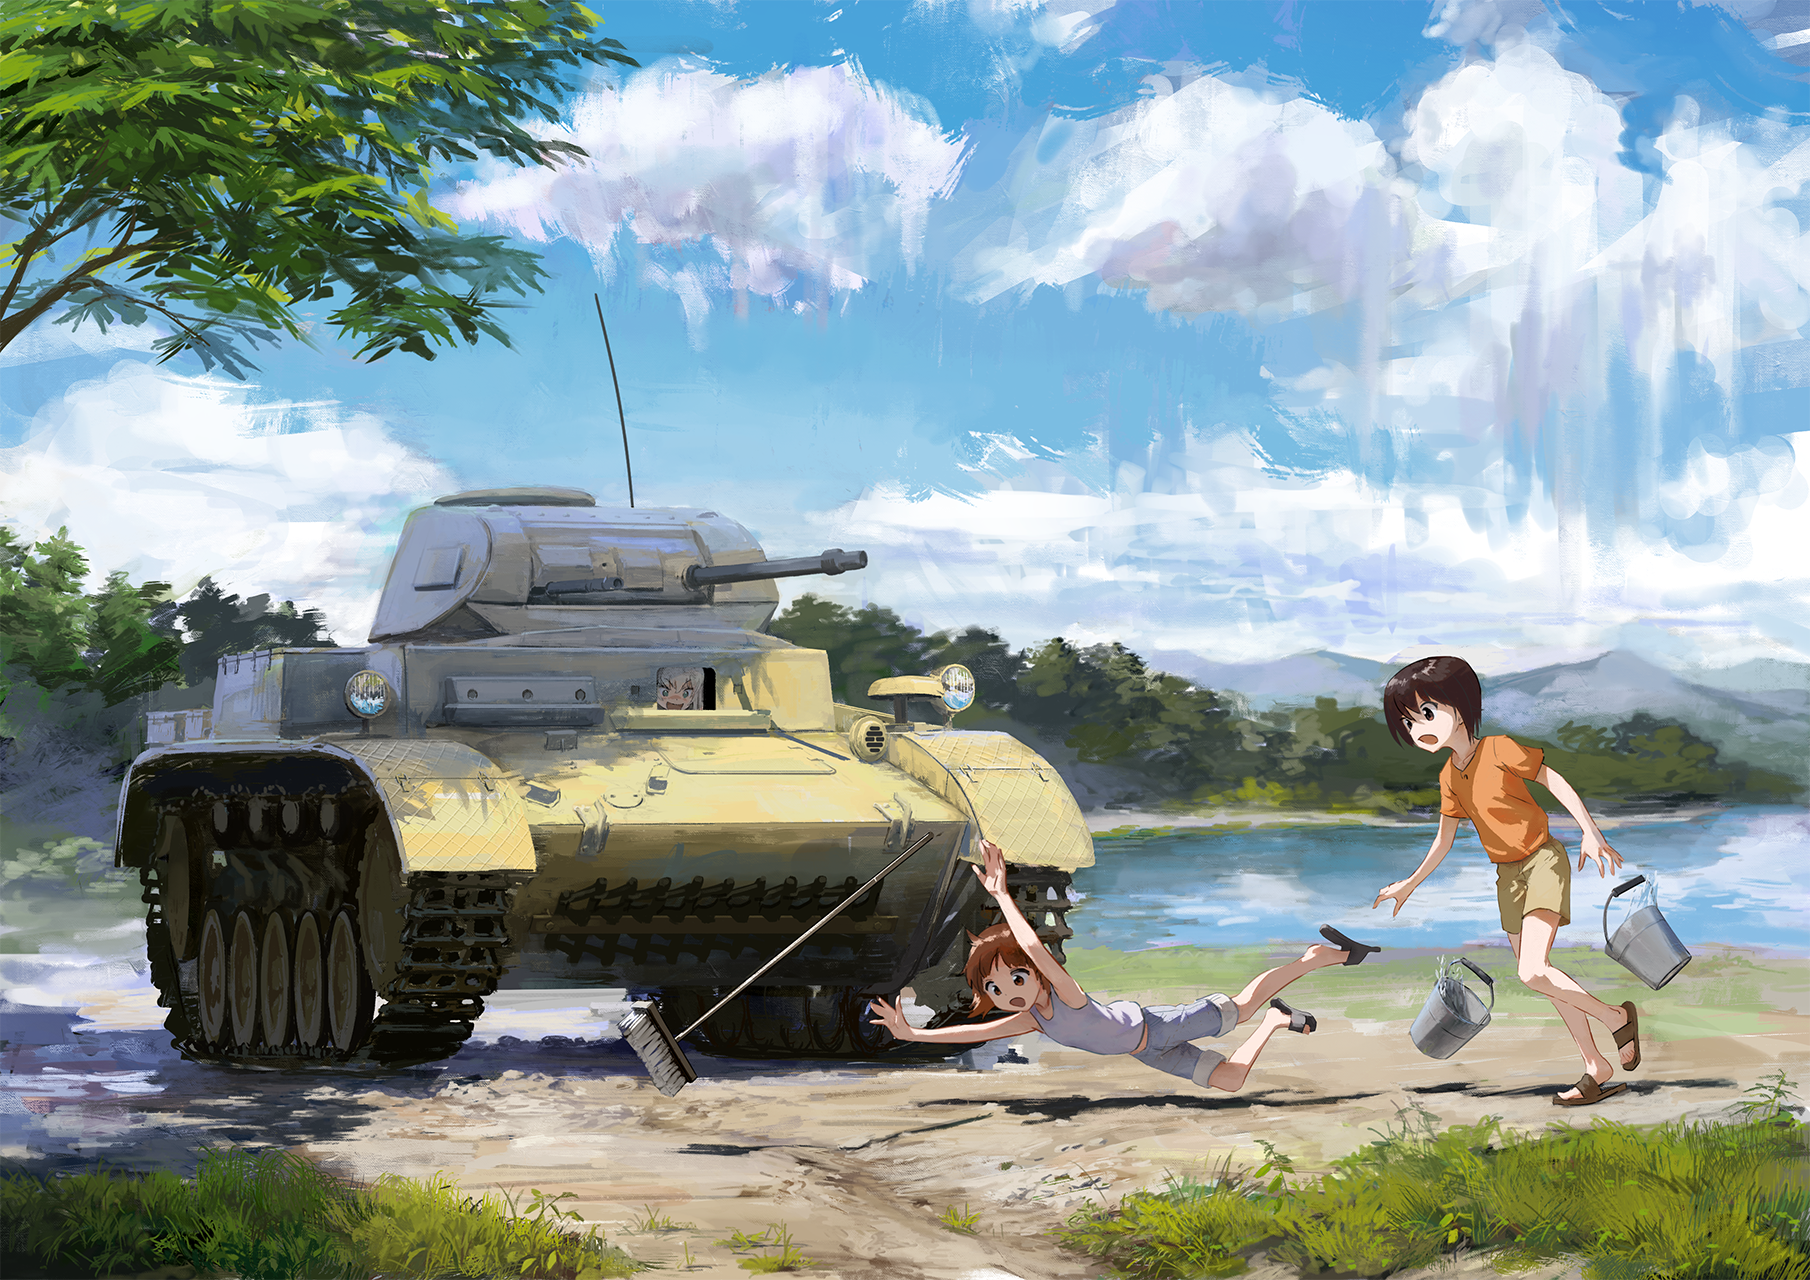 Girls und Panzer Wallpaper and Background Image | 1810x1280 | ID:831260